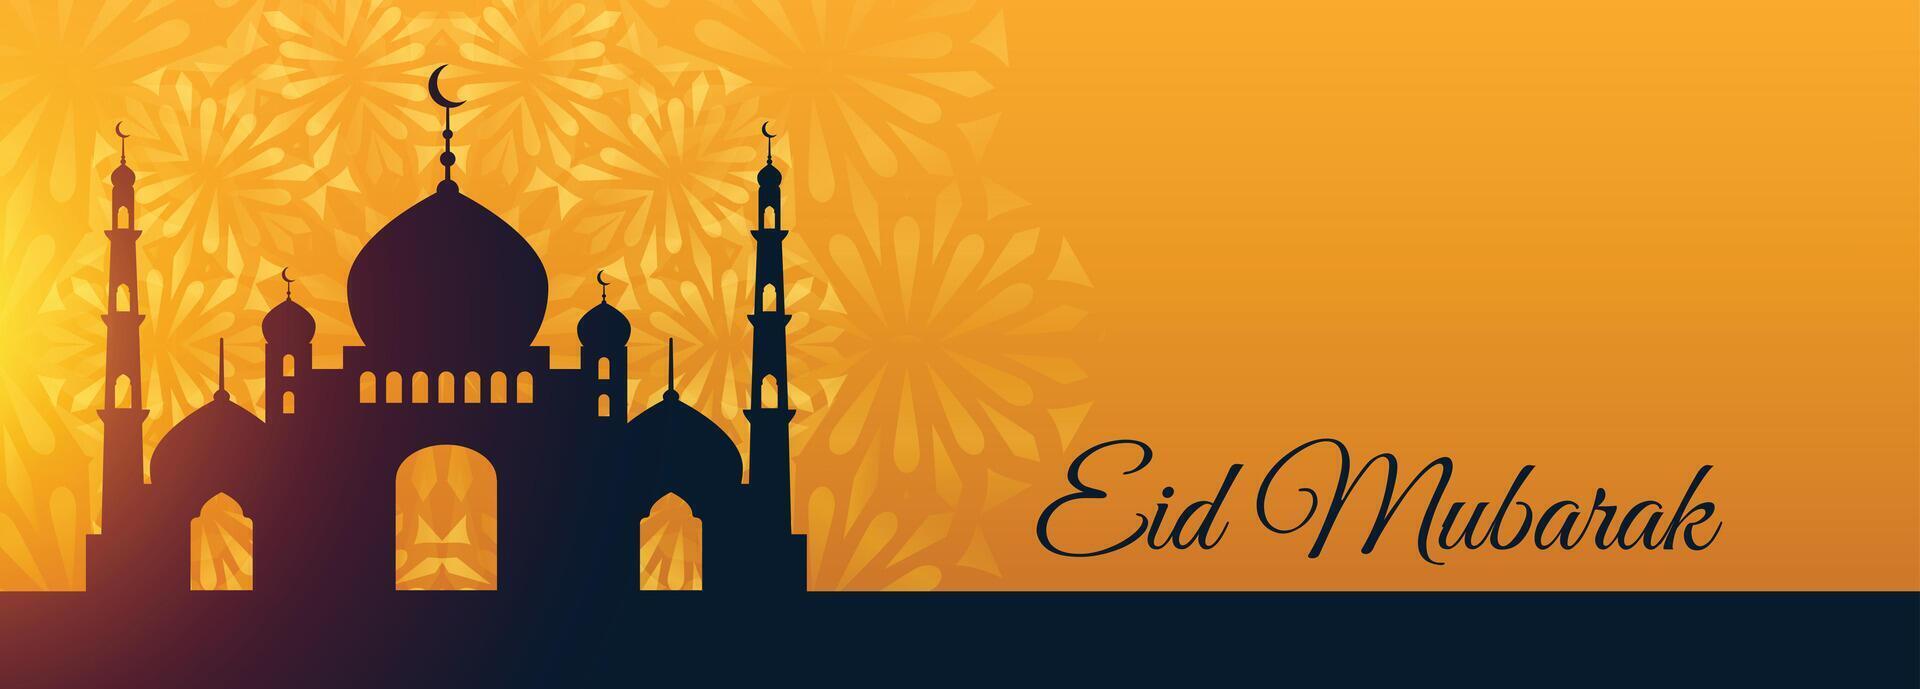 eid mubarak festival moskee mooi wensen banier vector